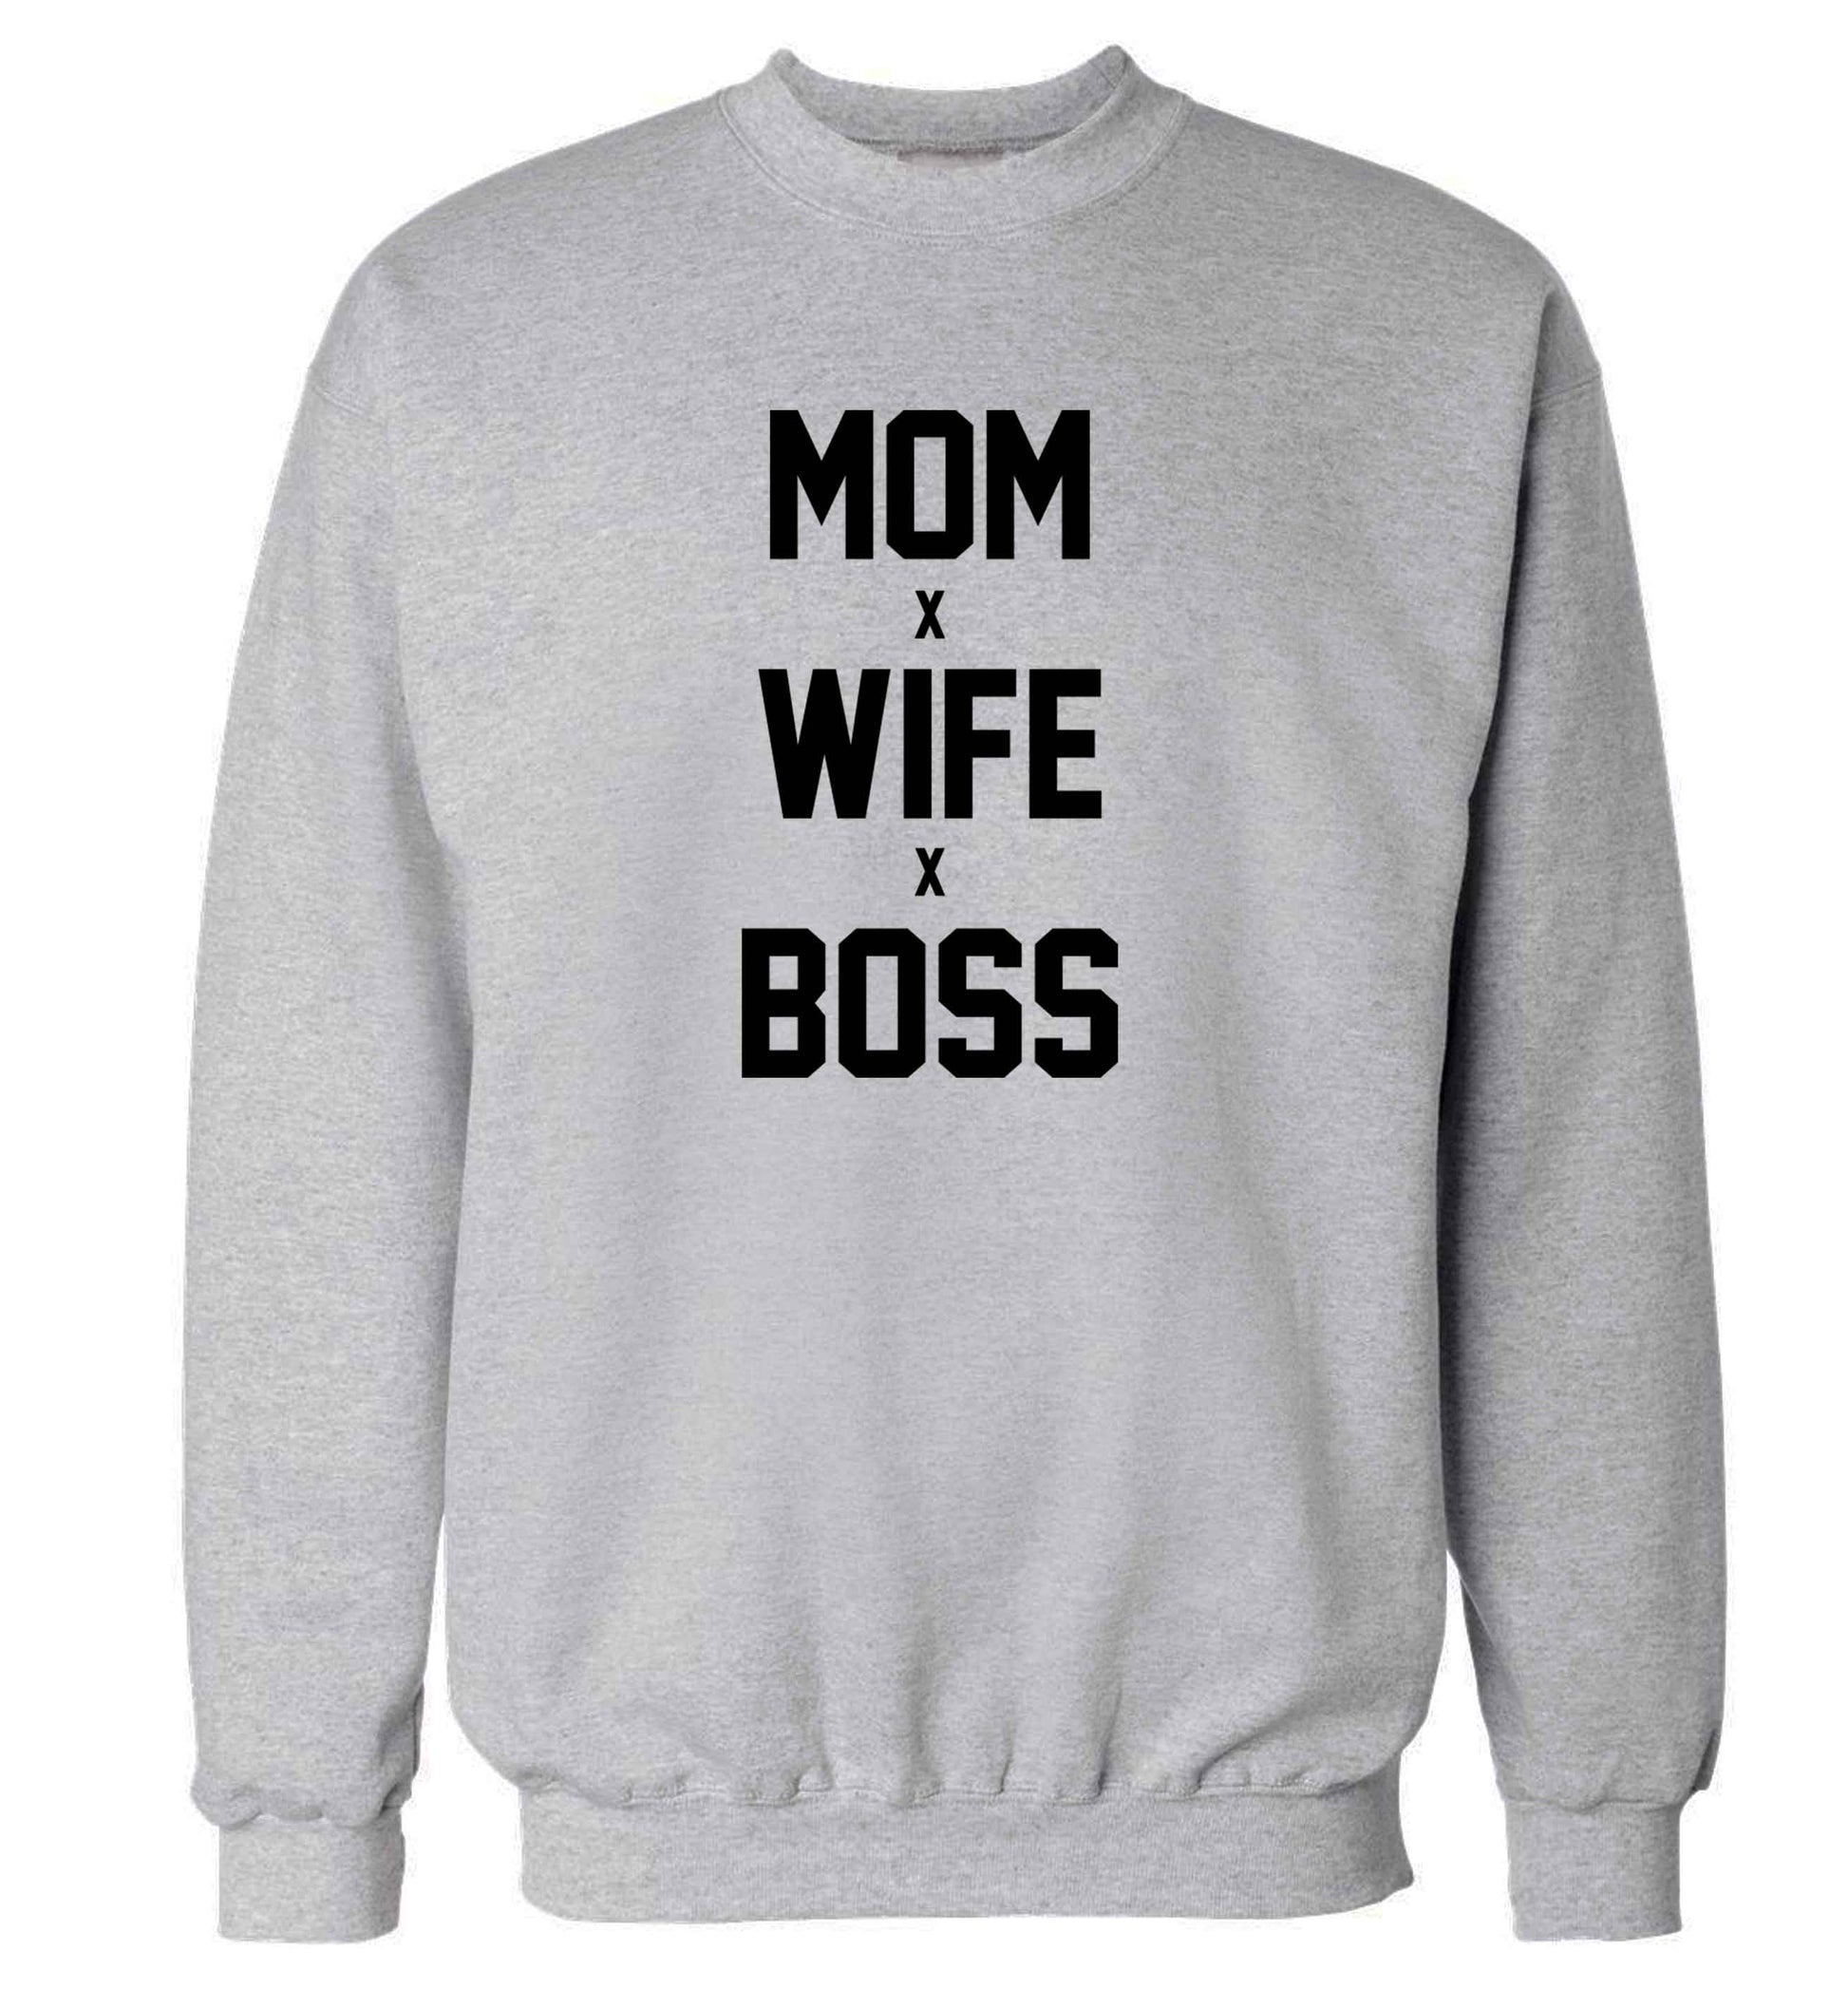 Mum wife boss adult's unisex grey sweater 2XL